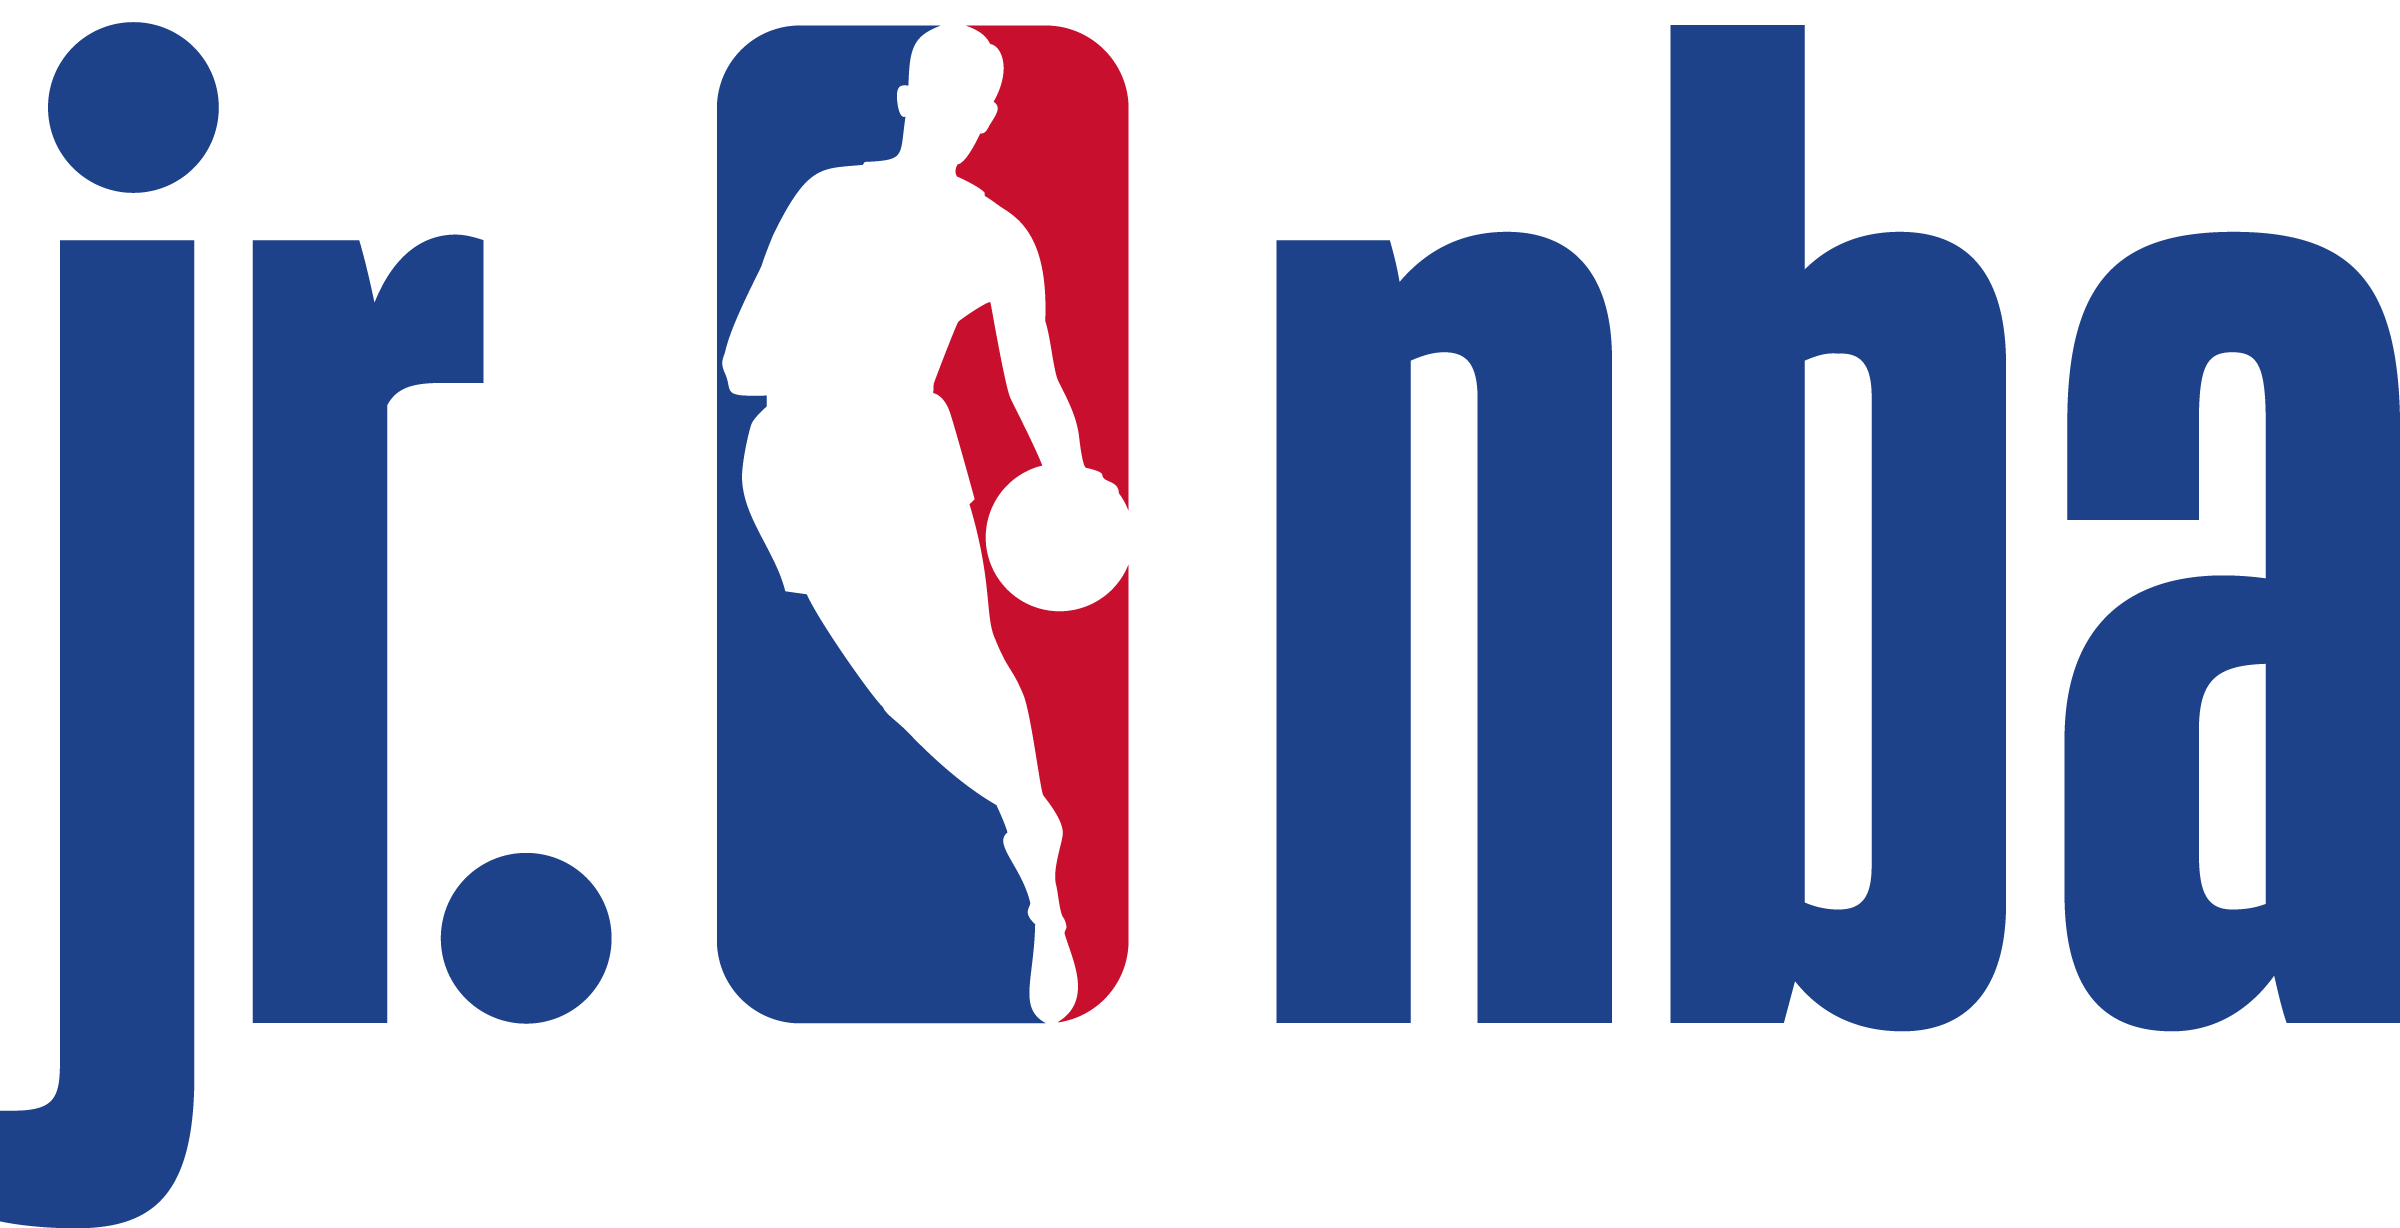 NBA logosu